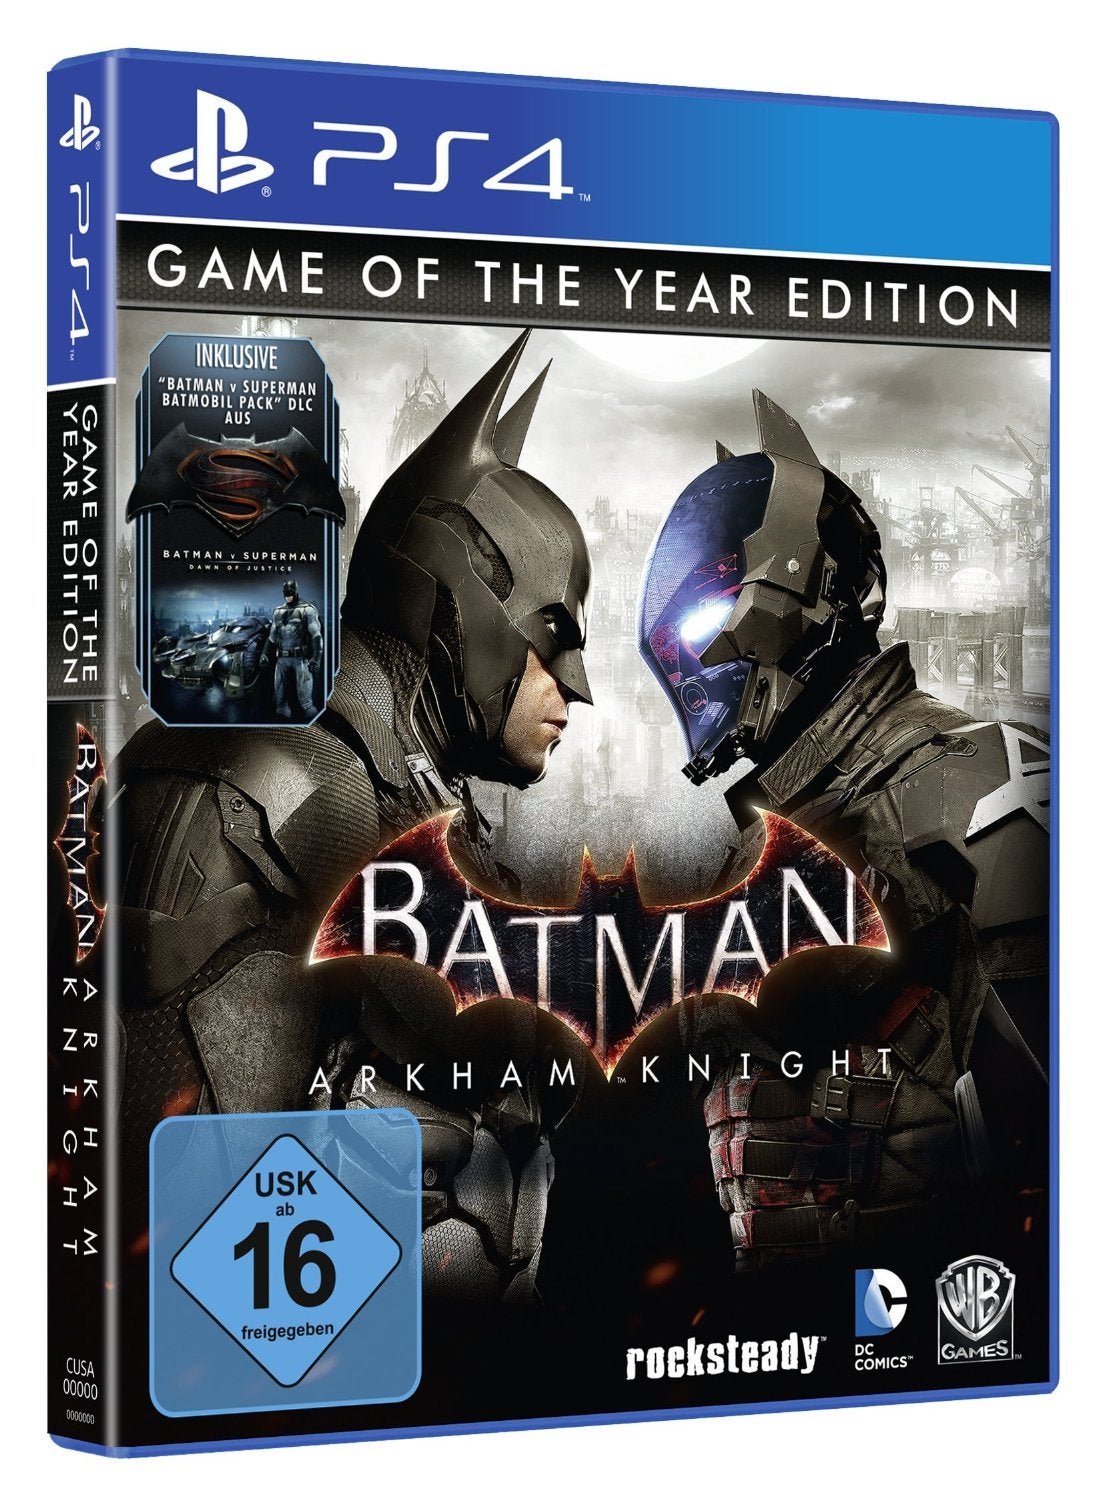 Image for Batman: Arkham Knight GOTY edition pops up on Amazon Germany